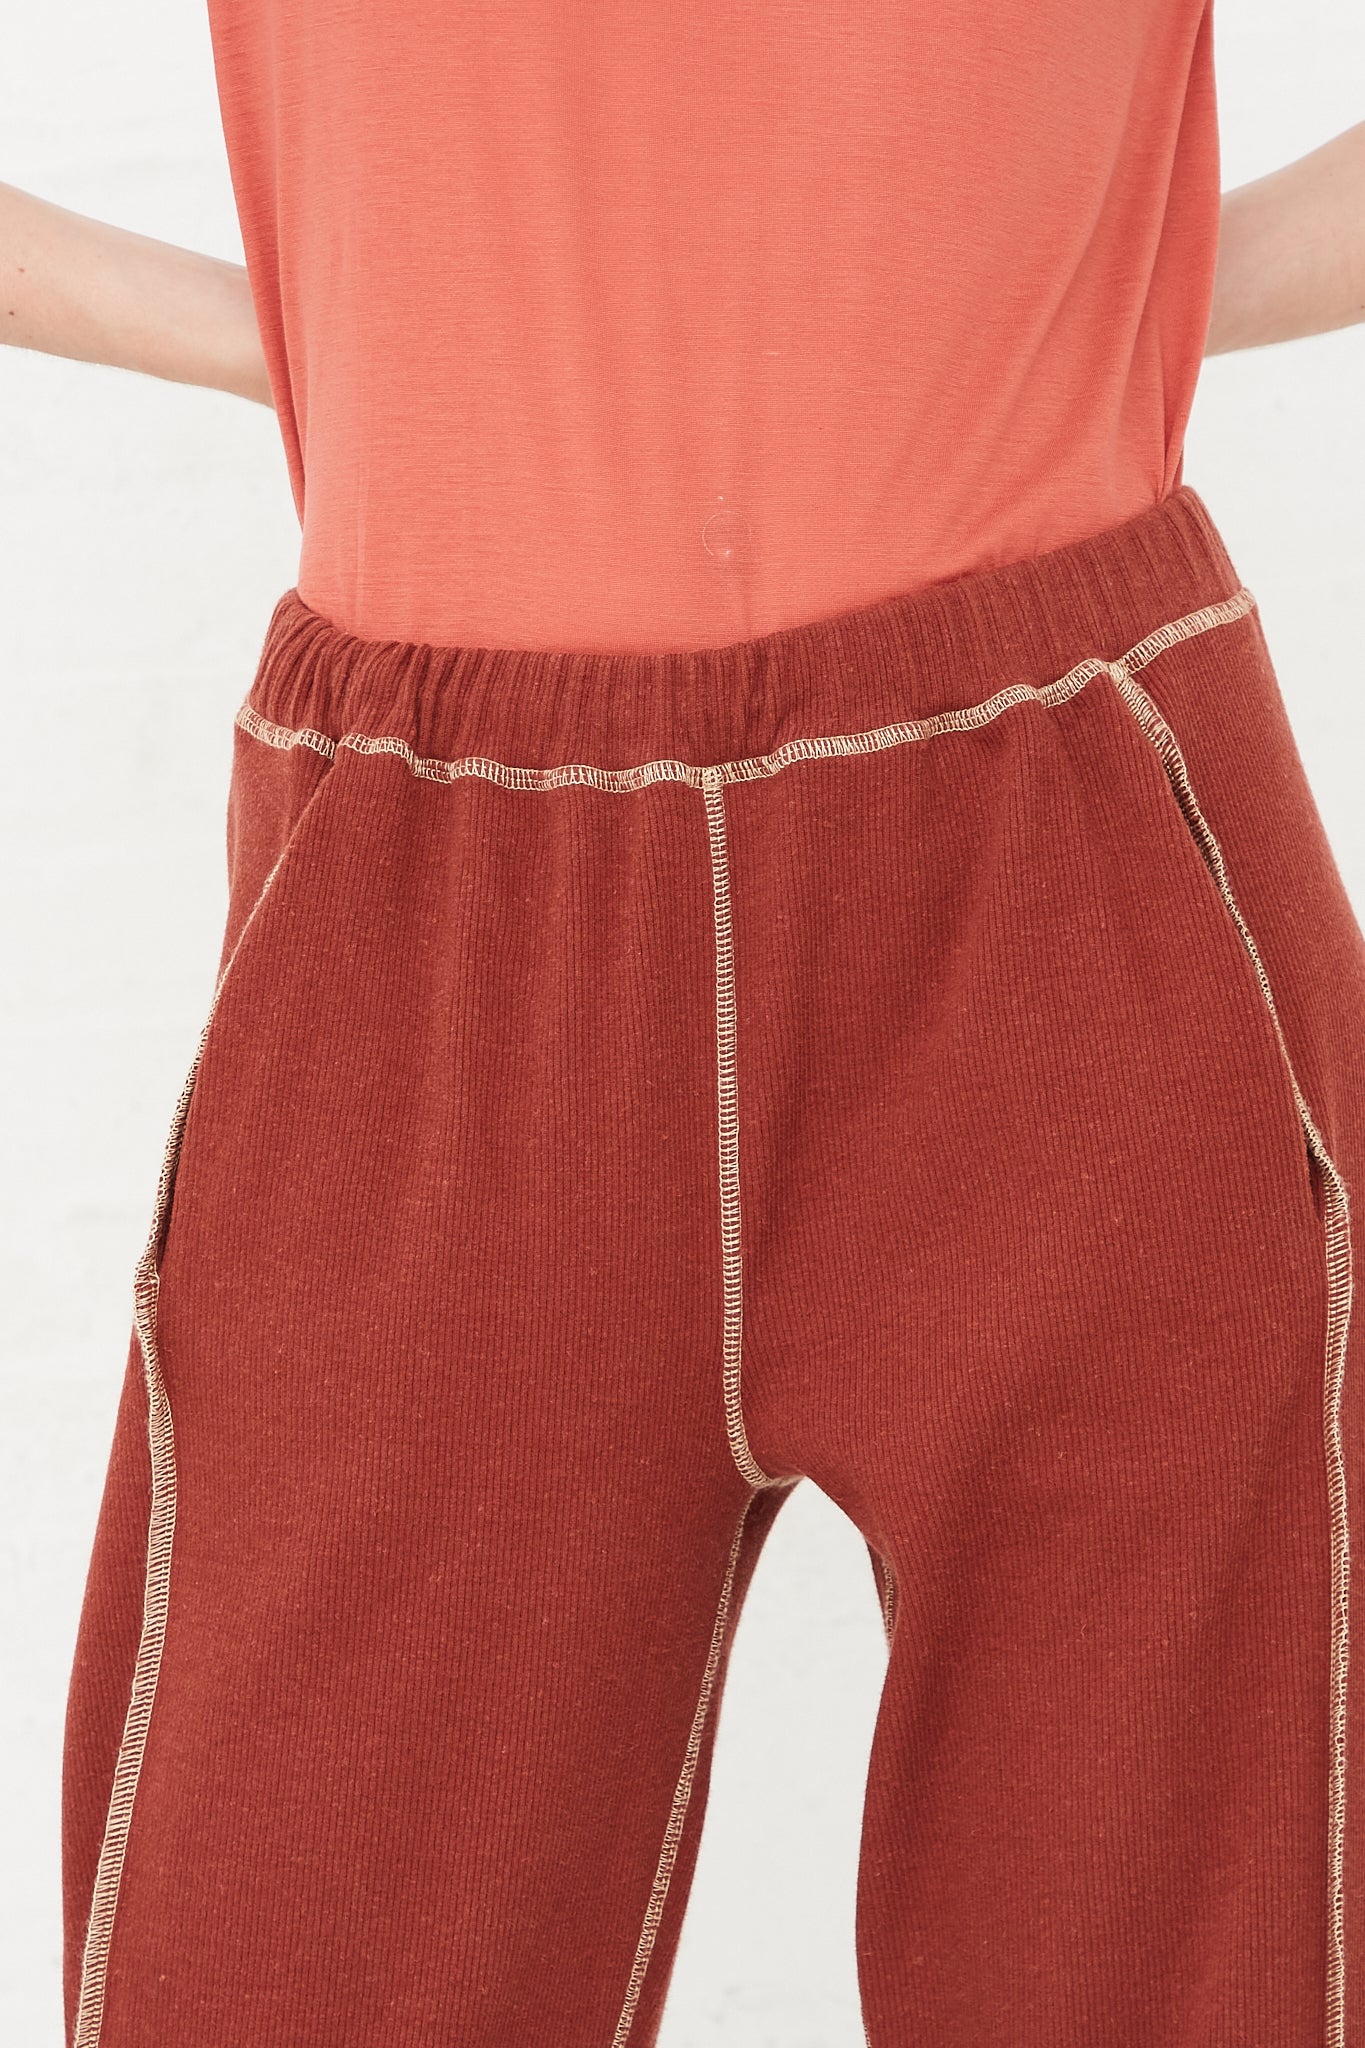 Baserange - Omato Sweatpants in Burned Punica front waist detail